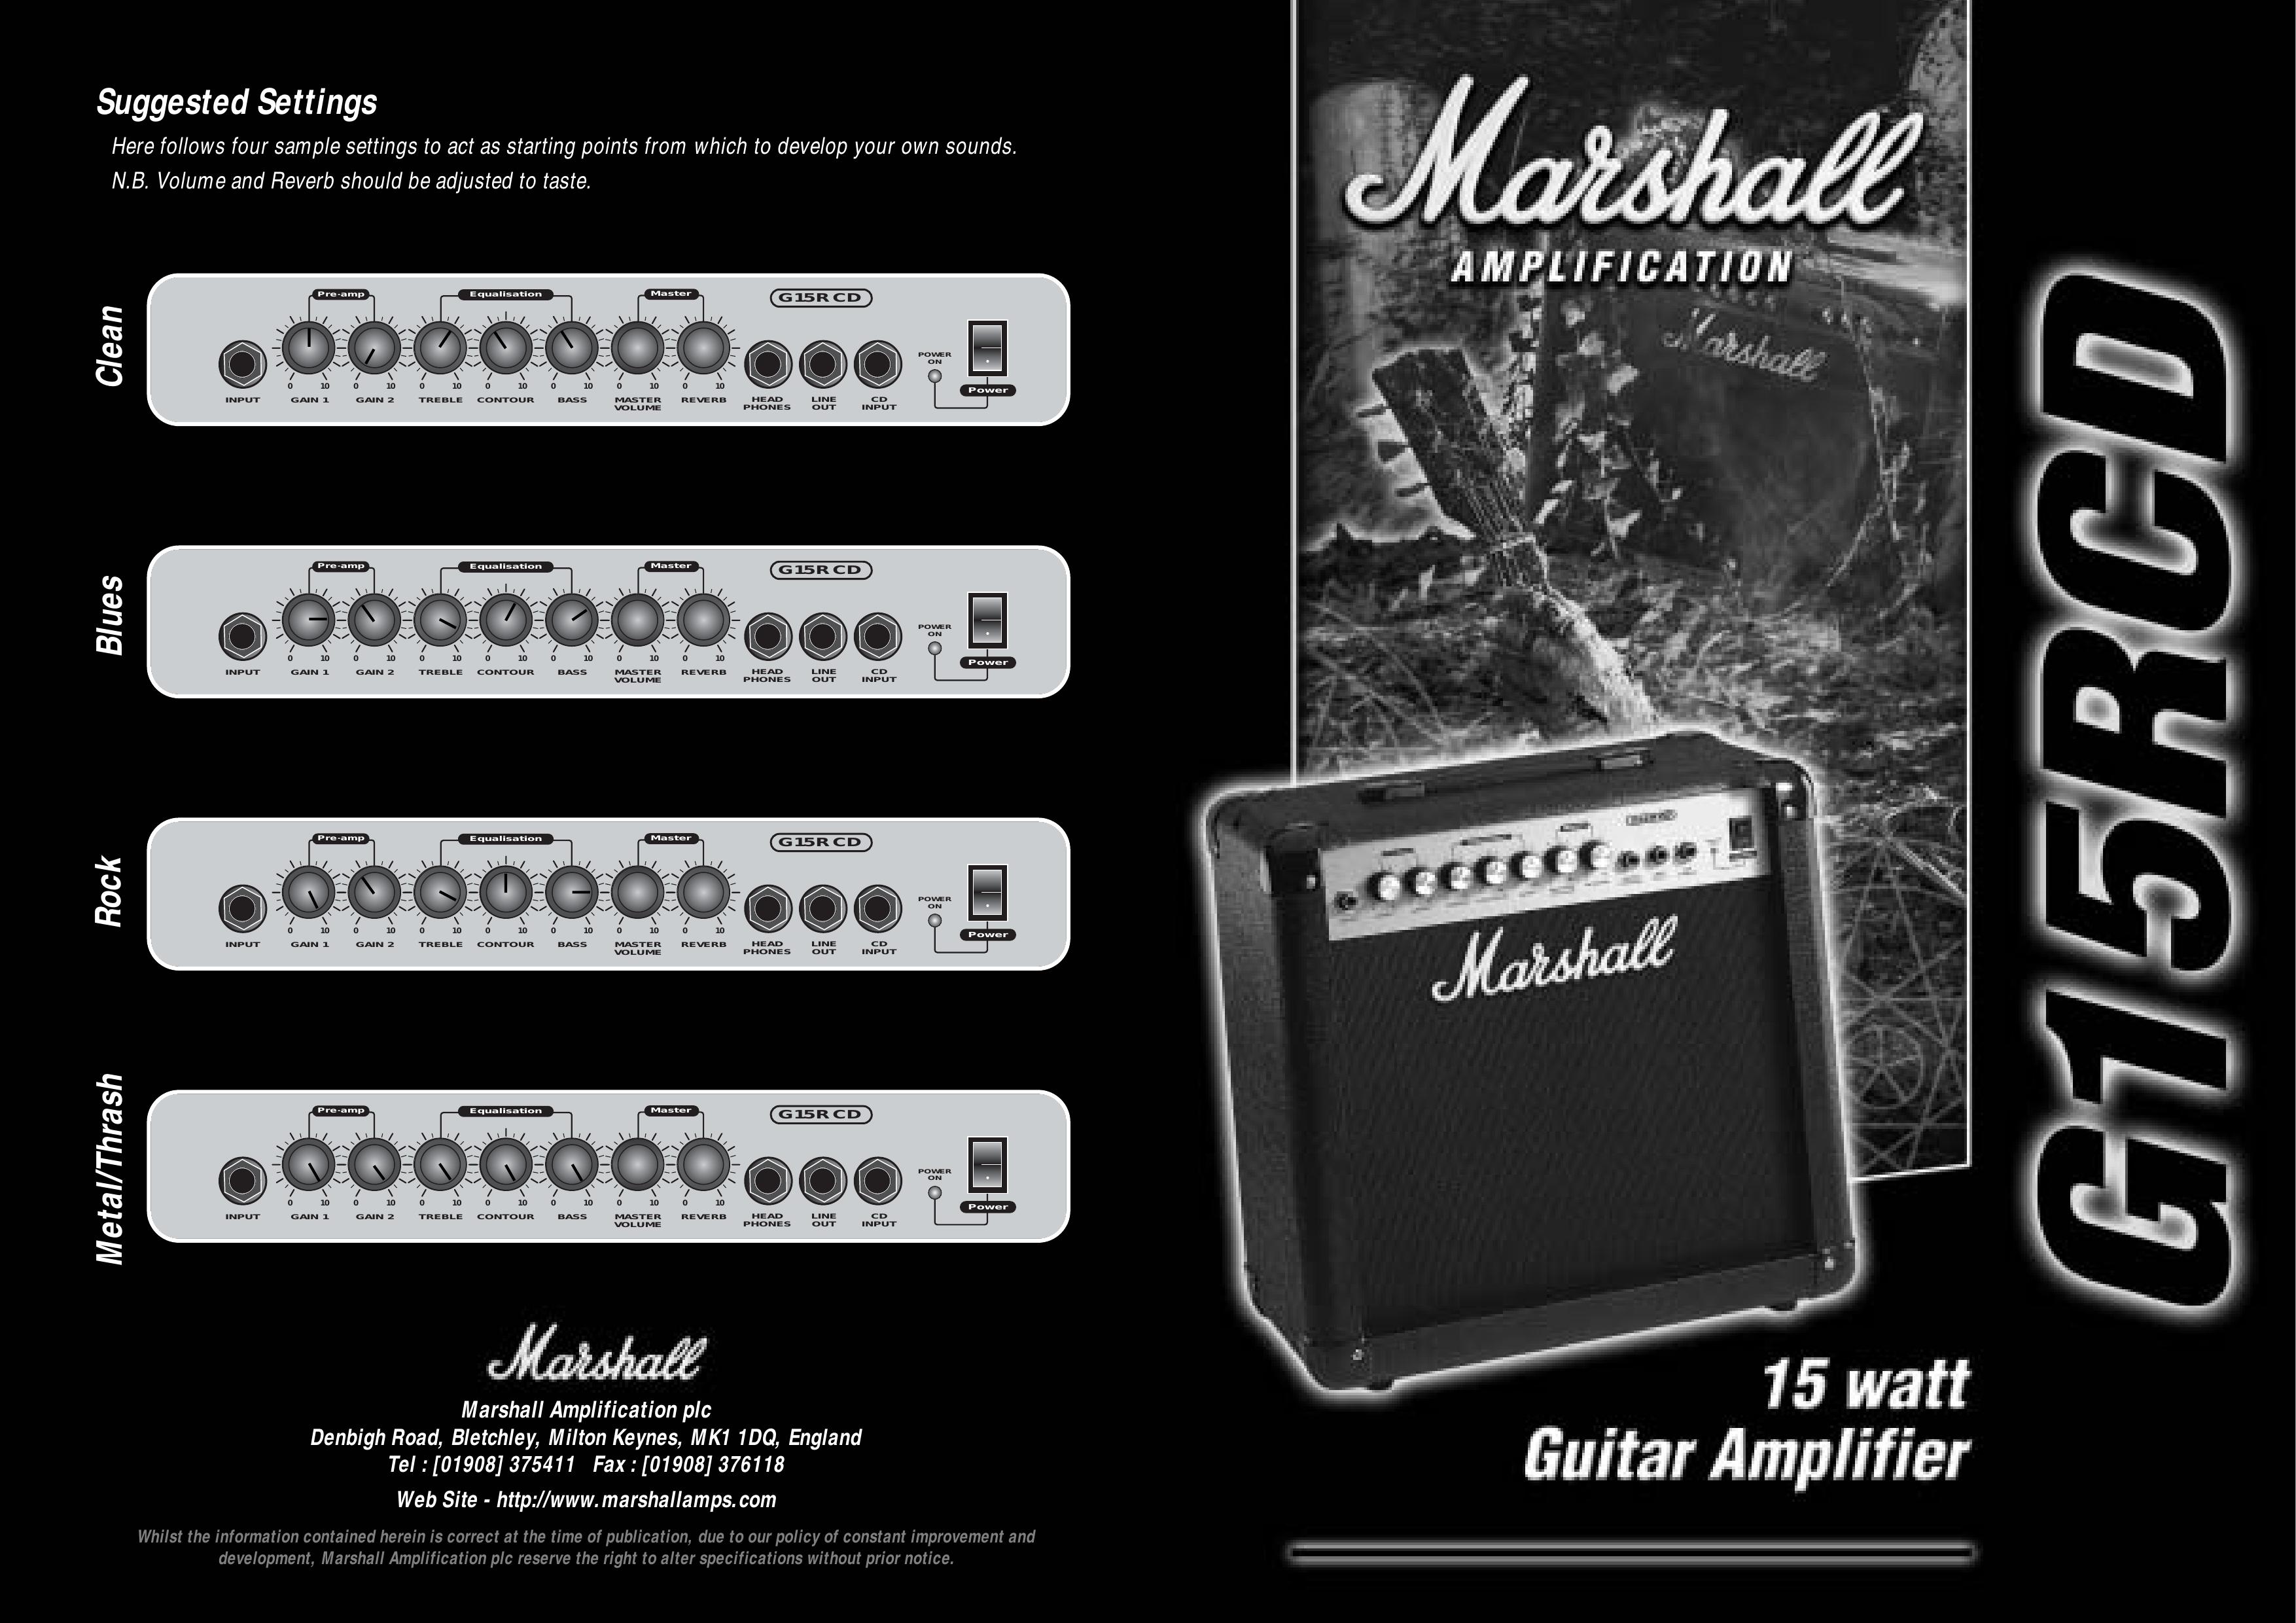 Marshall Amplification G15RCD Musical Instrument Amplifier User Manual